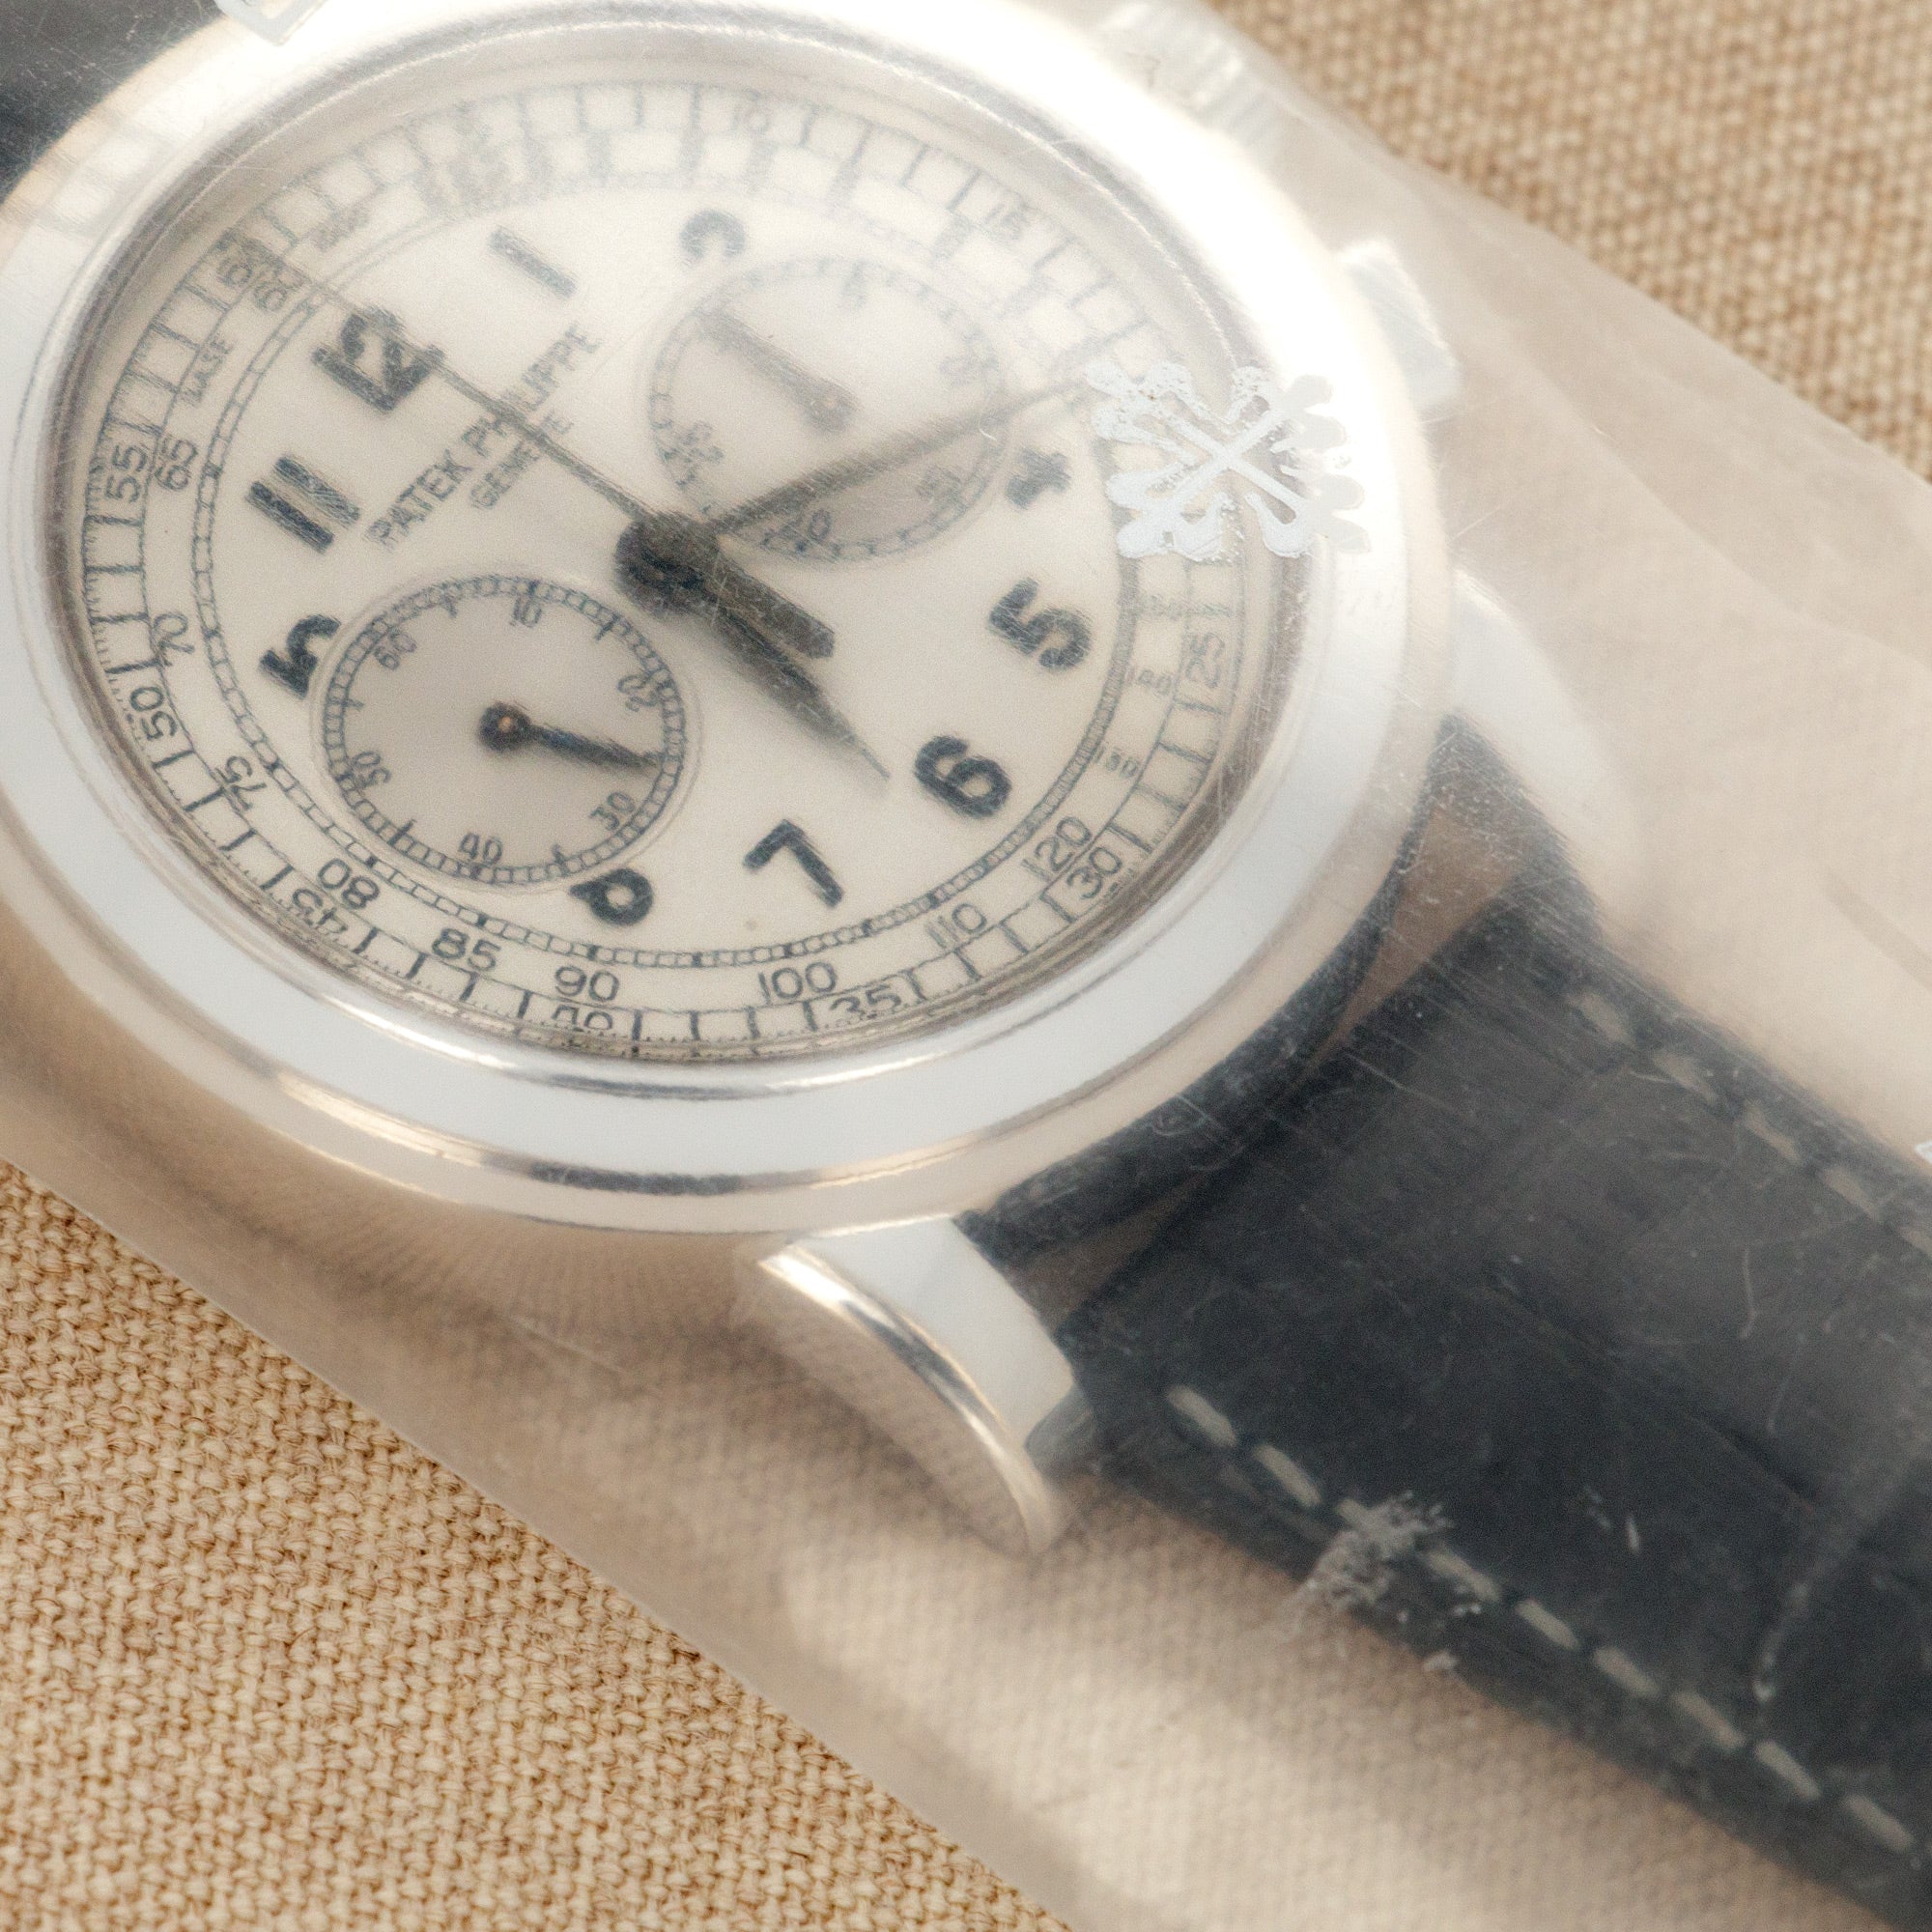 Patek Philippe - Patek Philippe White Gold Chronograph Ref. 5070G, Unworn &amp; Single Sealed - The Keystone Watches